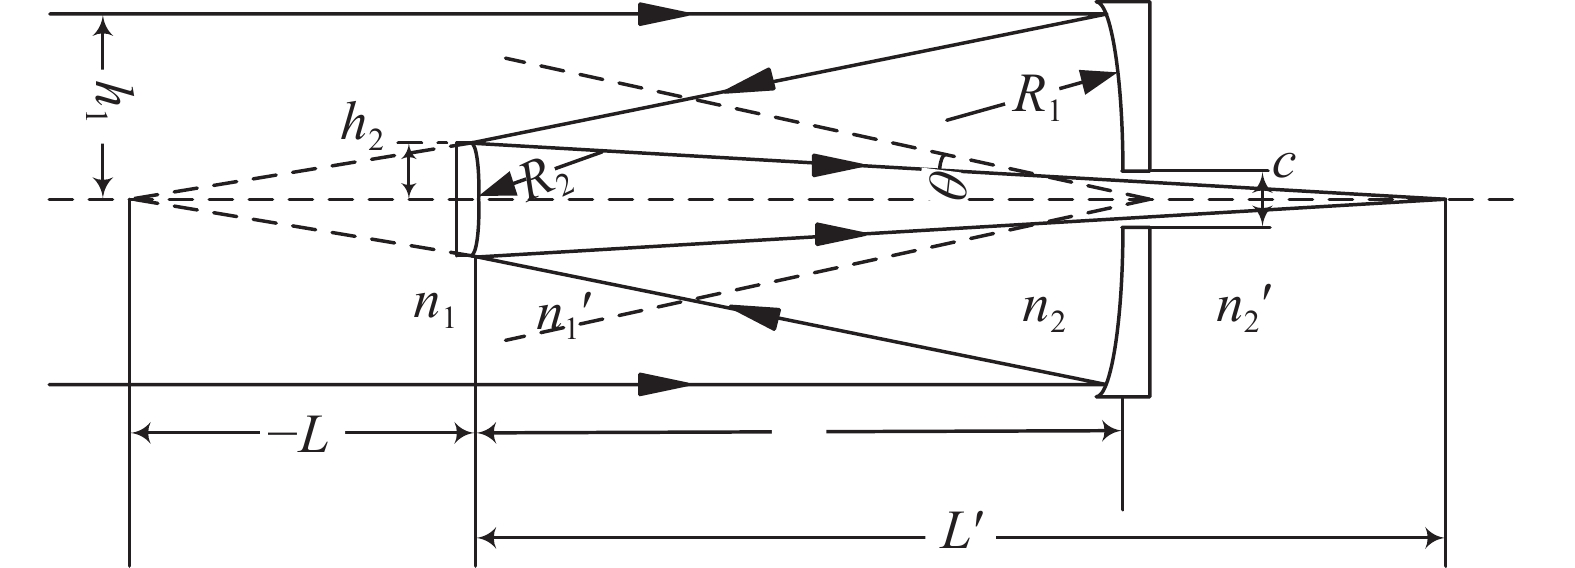 Structure diagram of Cassegrains type optical antenna